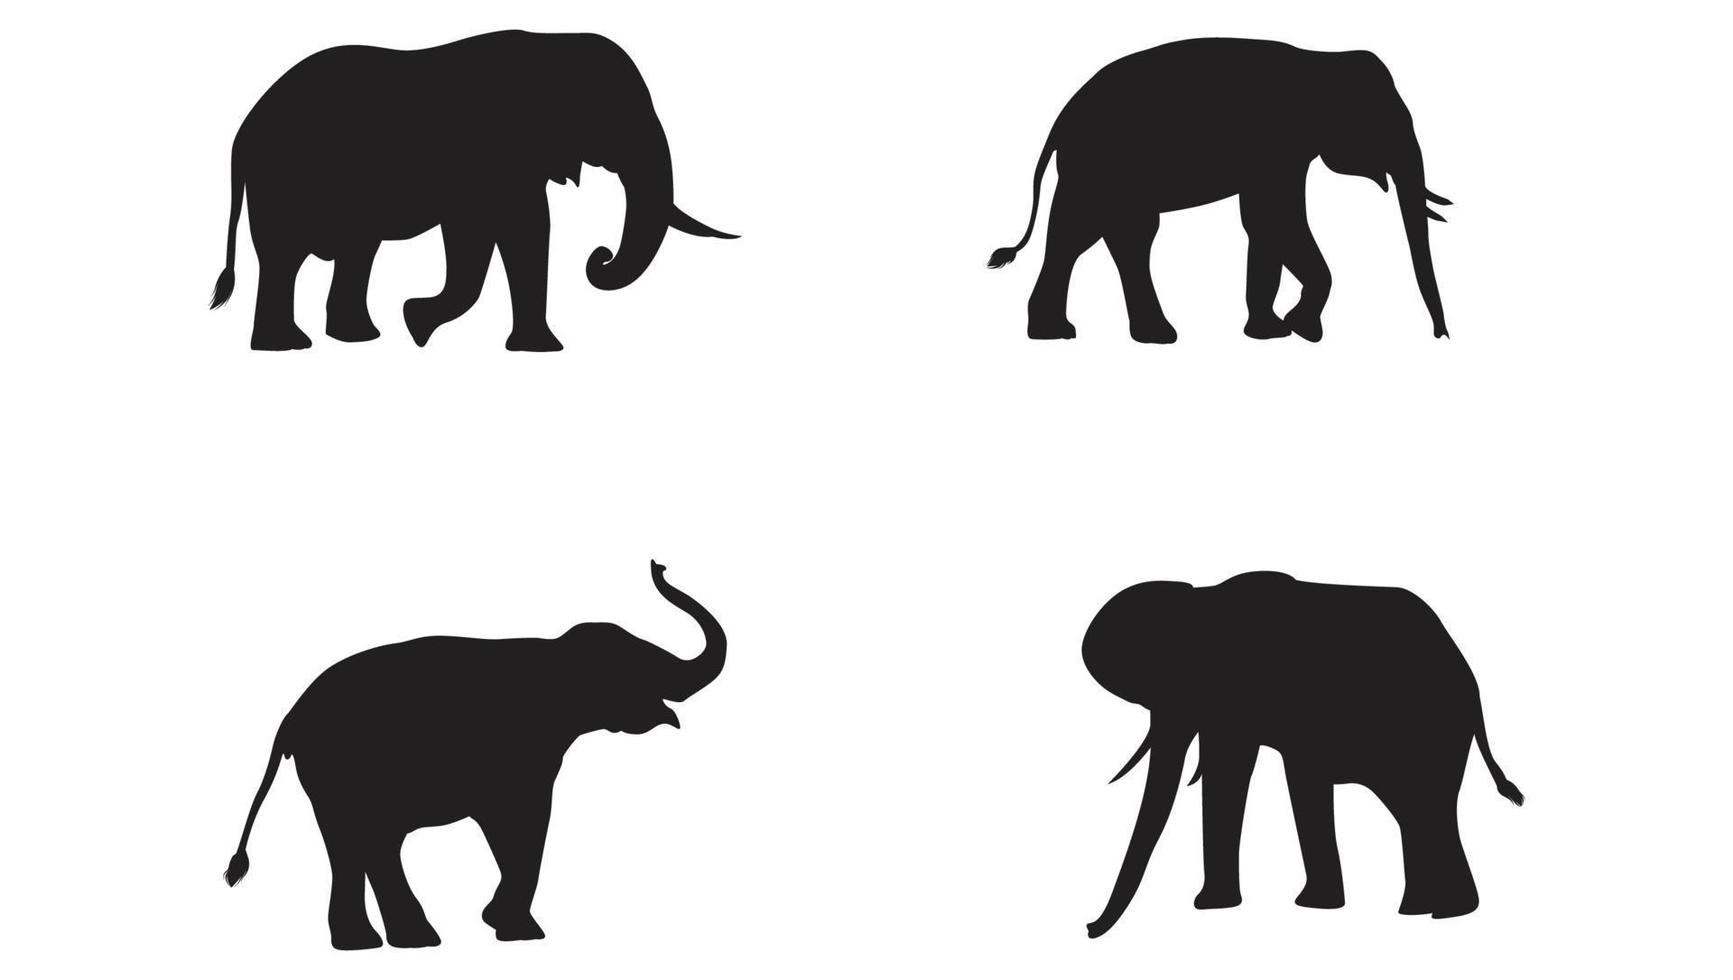 samling av djur- elefant silhuetter i annorlunda positioner fri vektor